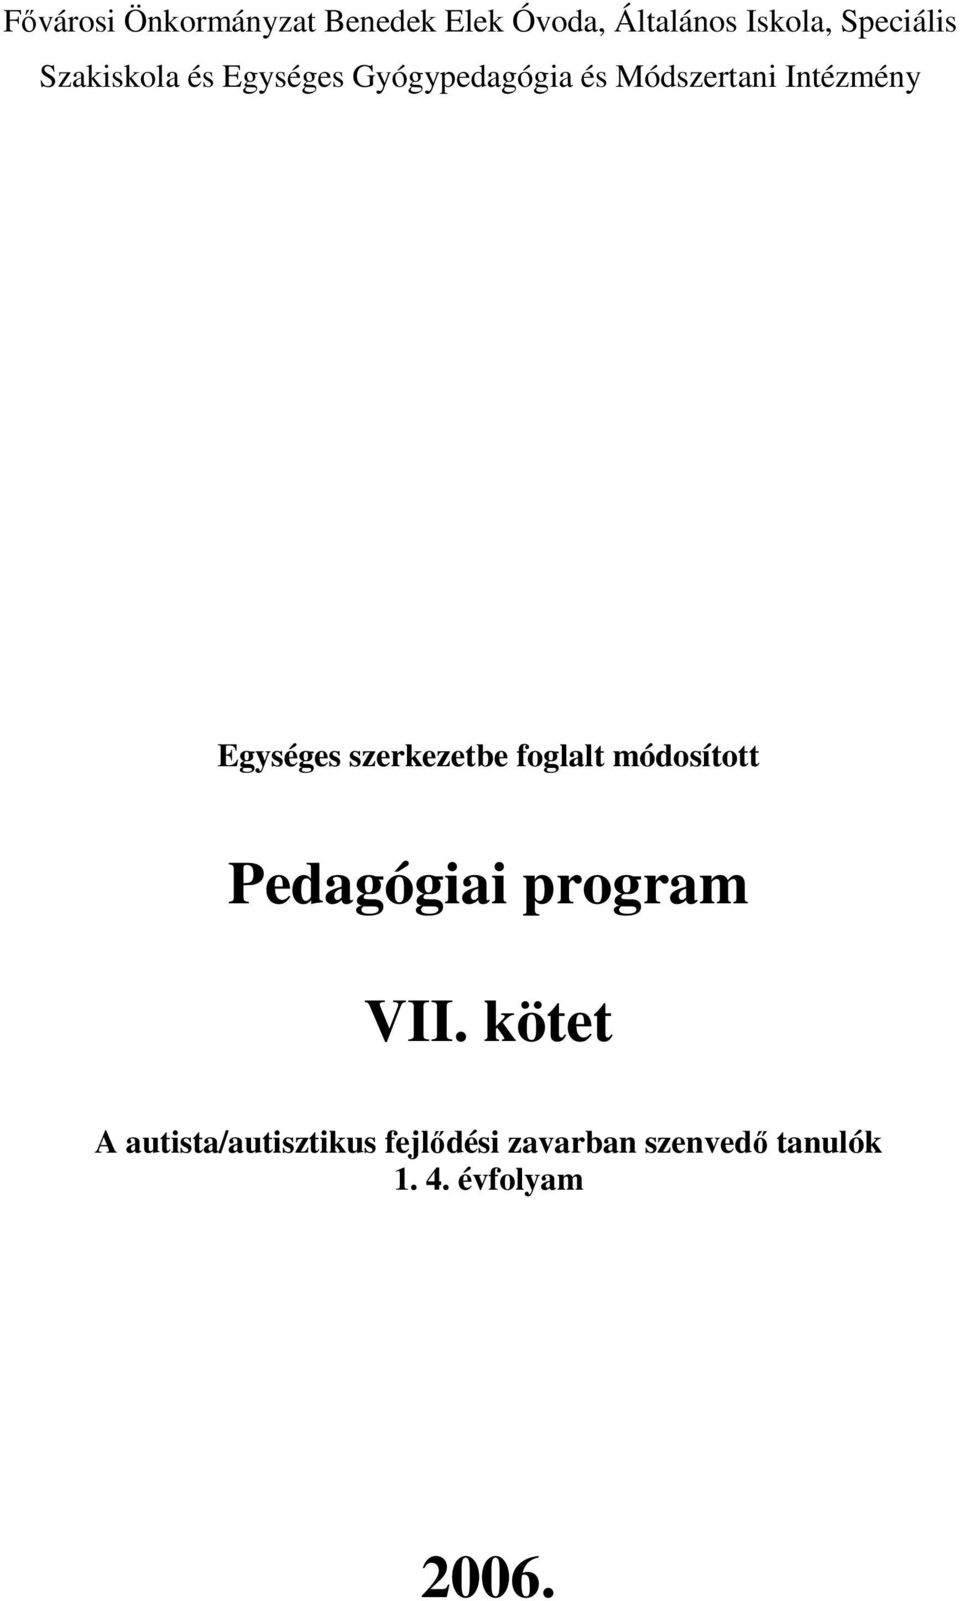 Pedagógiai program. VII. kötet - PDF Free Download